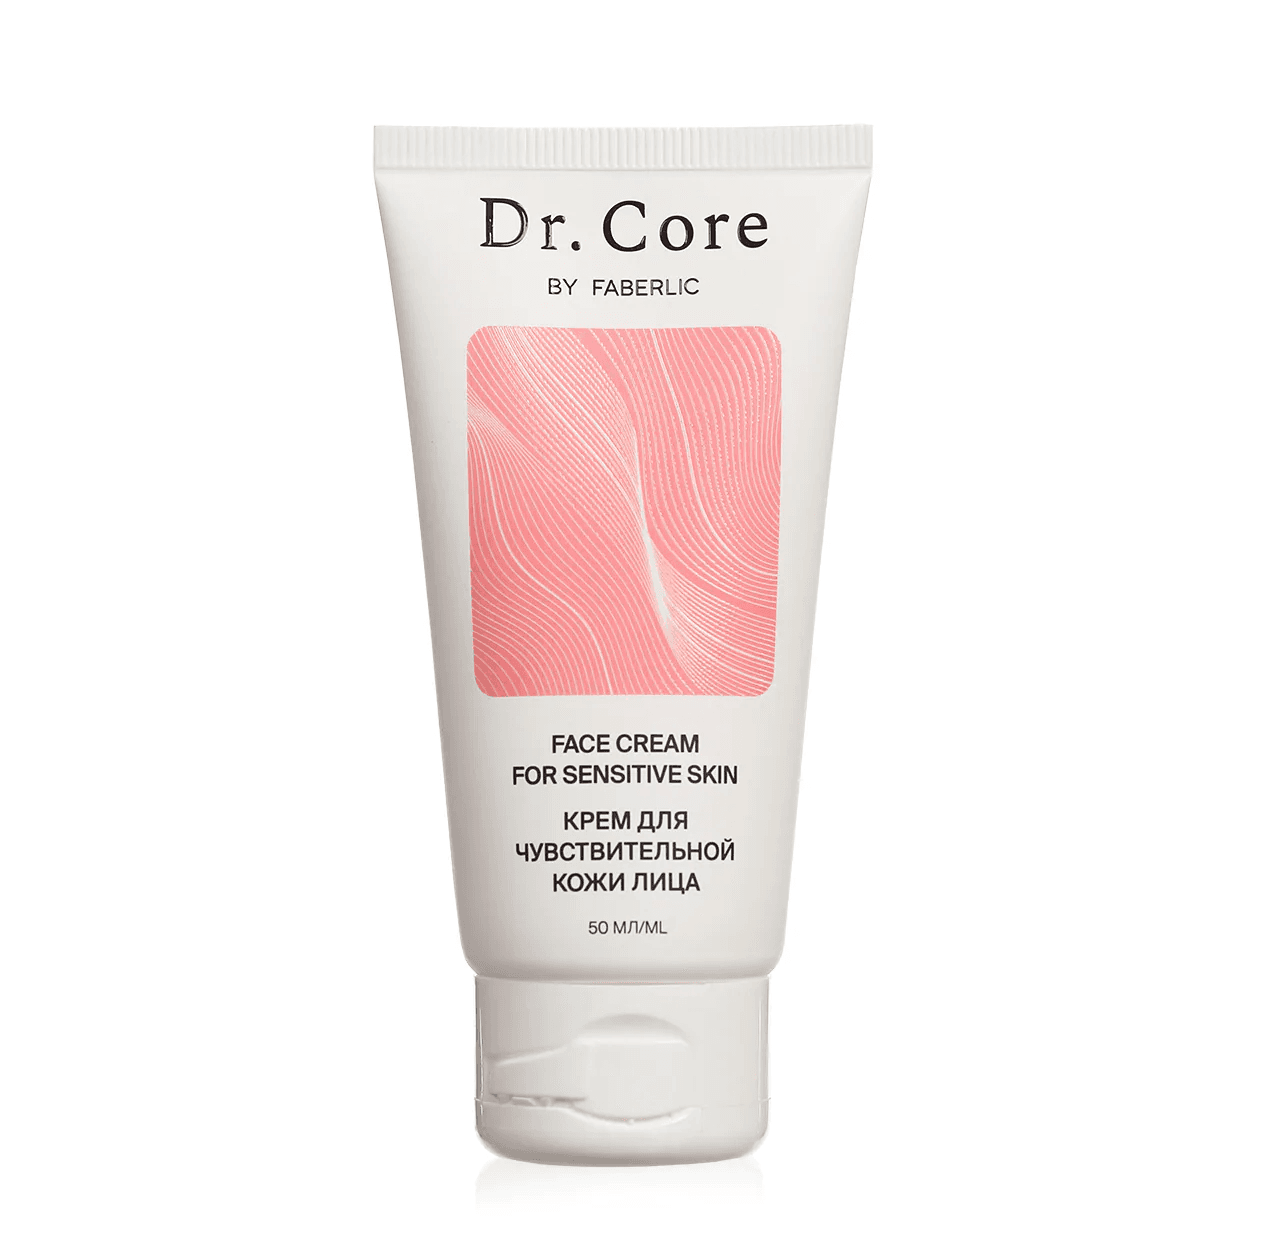 Dr. Core Face Cream for Sensitive Skin